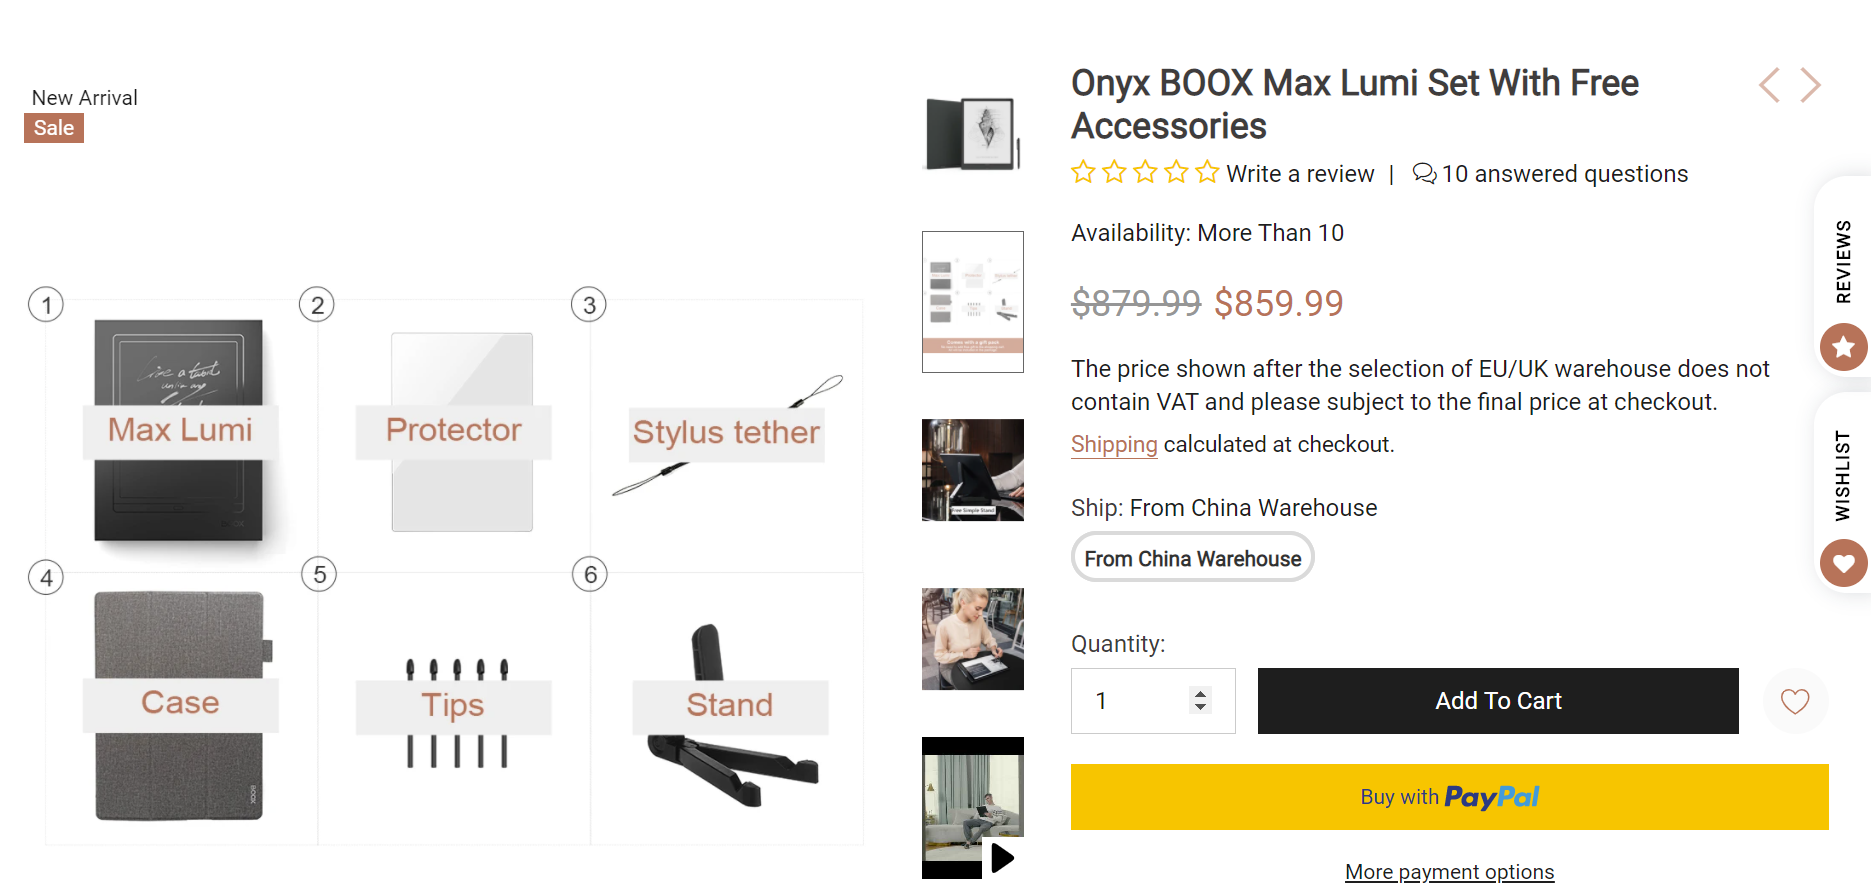 Onyx BOOX Max Lumiを買った: 電機屋の毎日